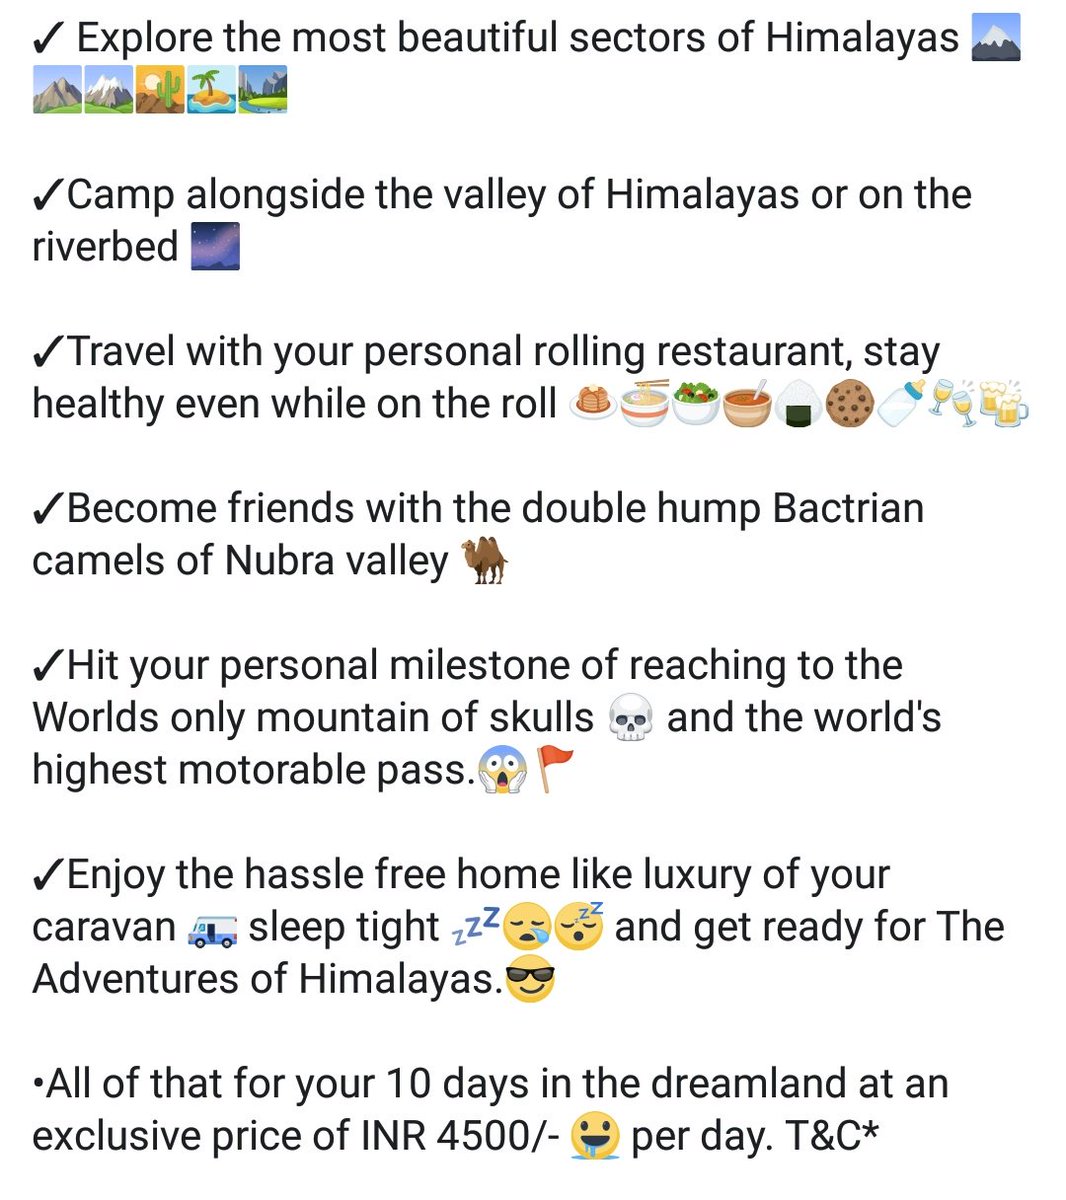 #motorhomeadventures #theadventuresofhimalayas
#himachal #wanderlust #manali #ladakh #indianphotography #indiatravelin #TLpics #promotion #mktg #camperlife #adventurer  #marketing #backpacking #solotraveller #travellers #vacationtime #traveladdict #adventurelove #snow #jktourism